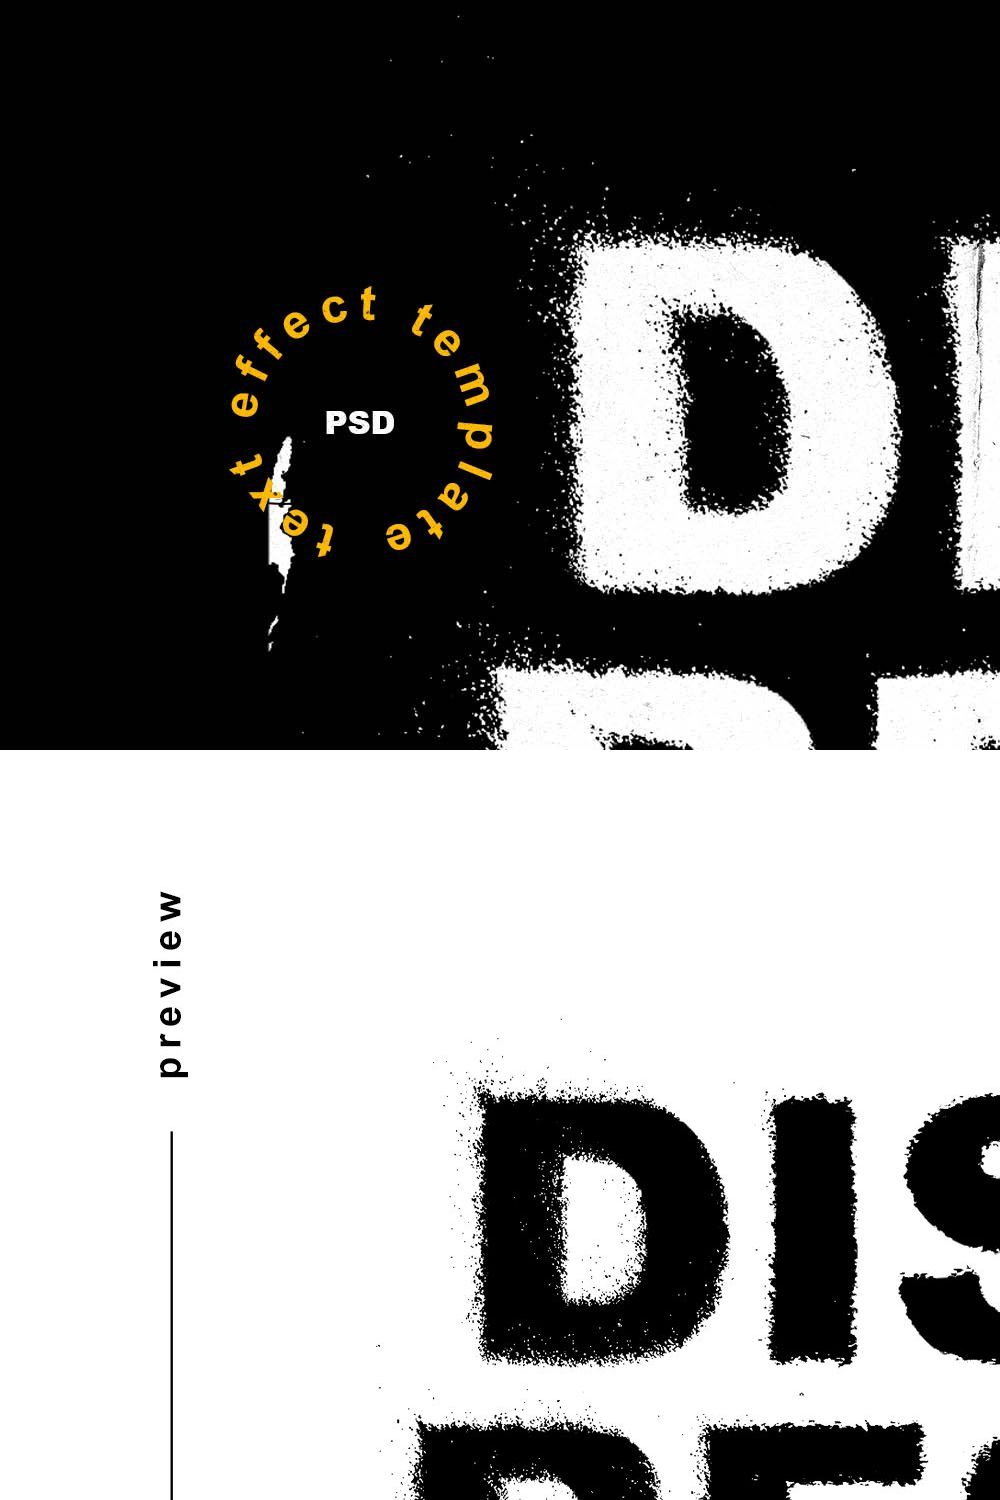 Distress Damage Text Effect Template pinterest preview image.